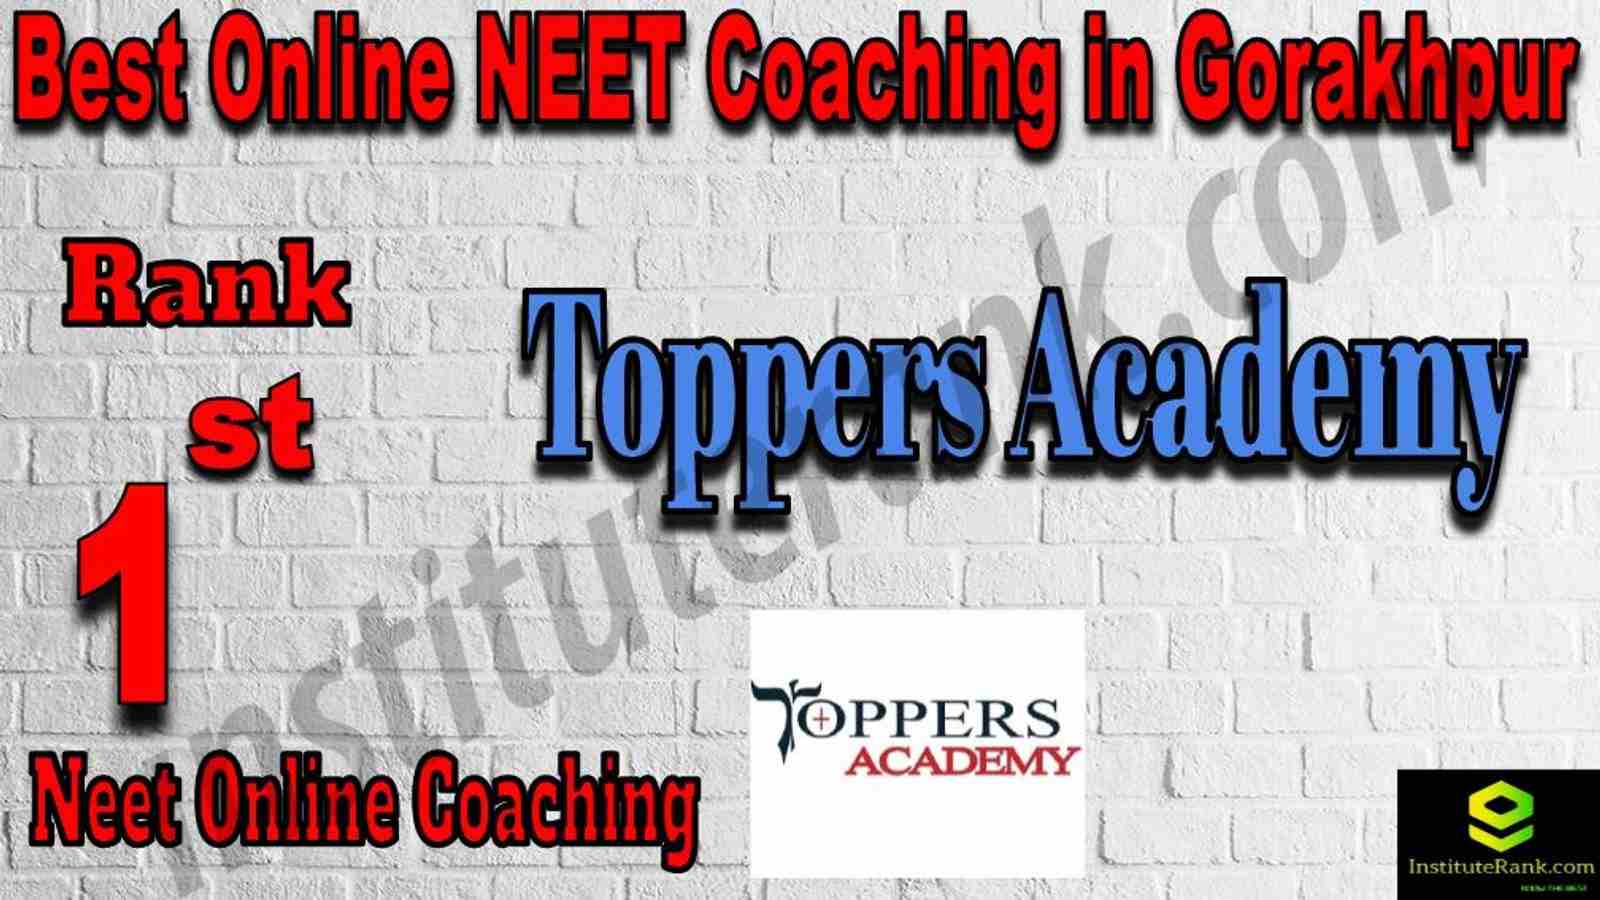 1st Best Online Neet Coaching in Gorakhpur